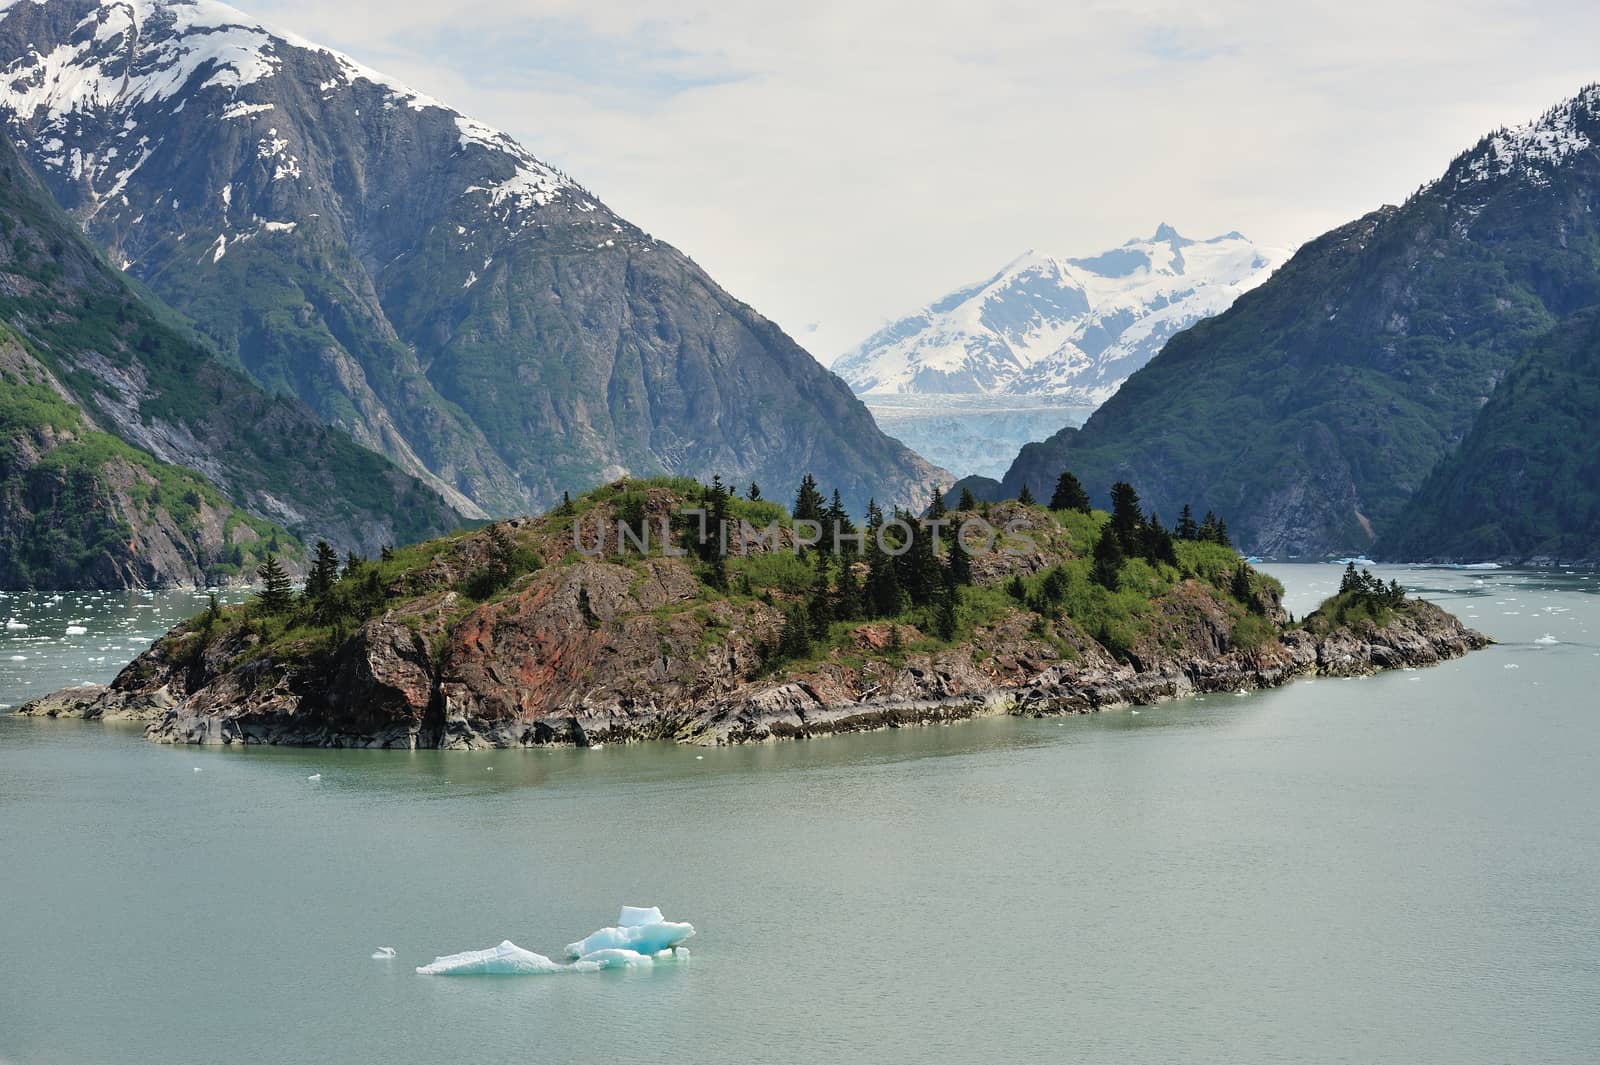 A view in Alaska